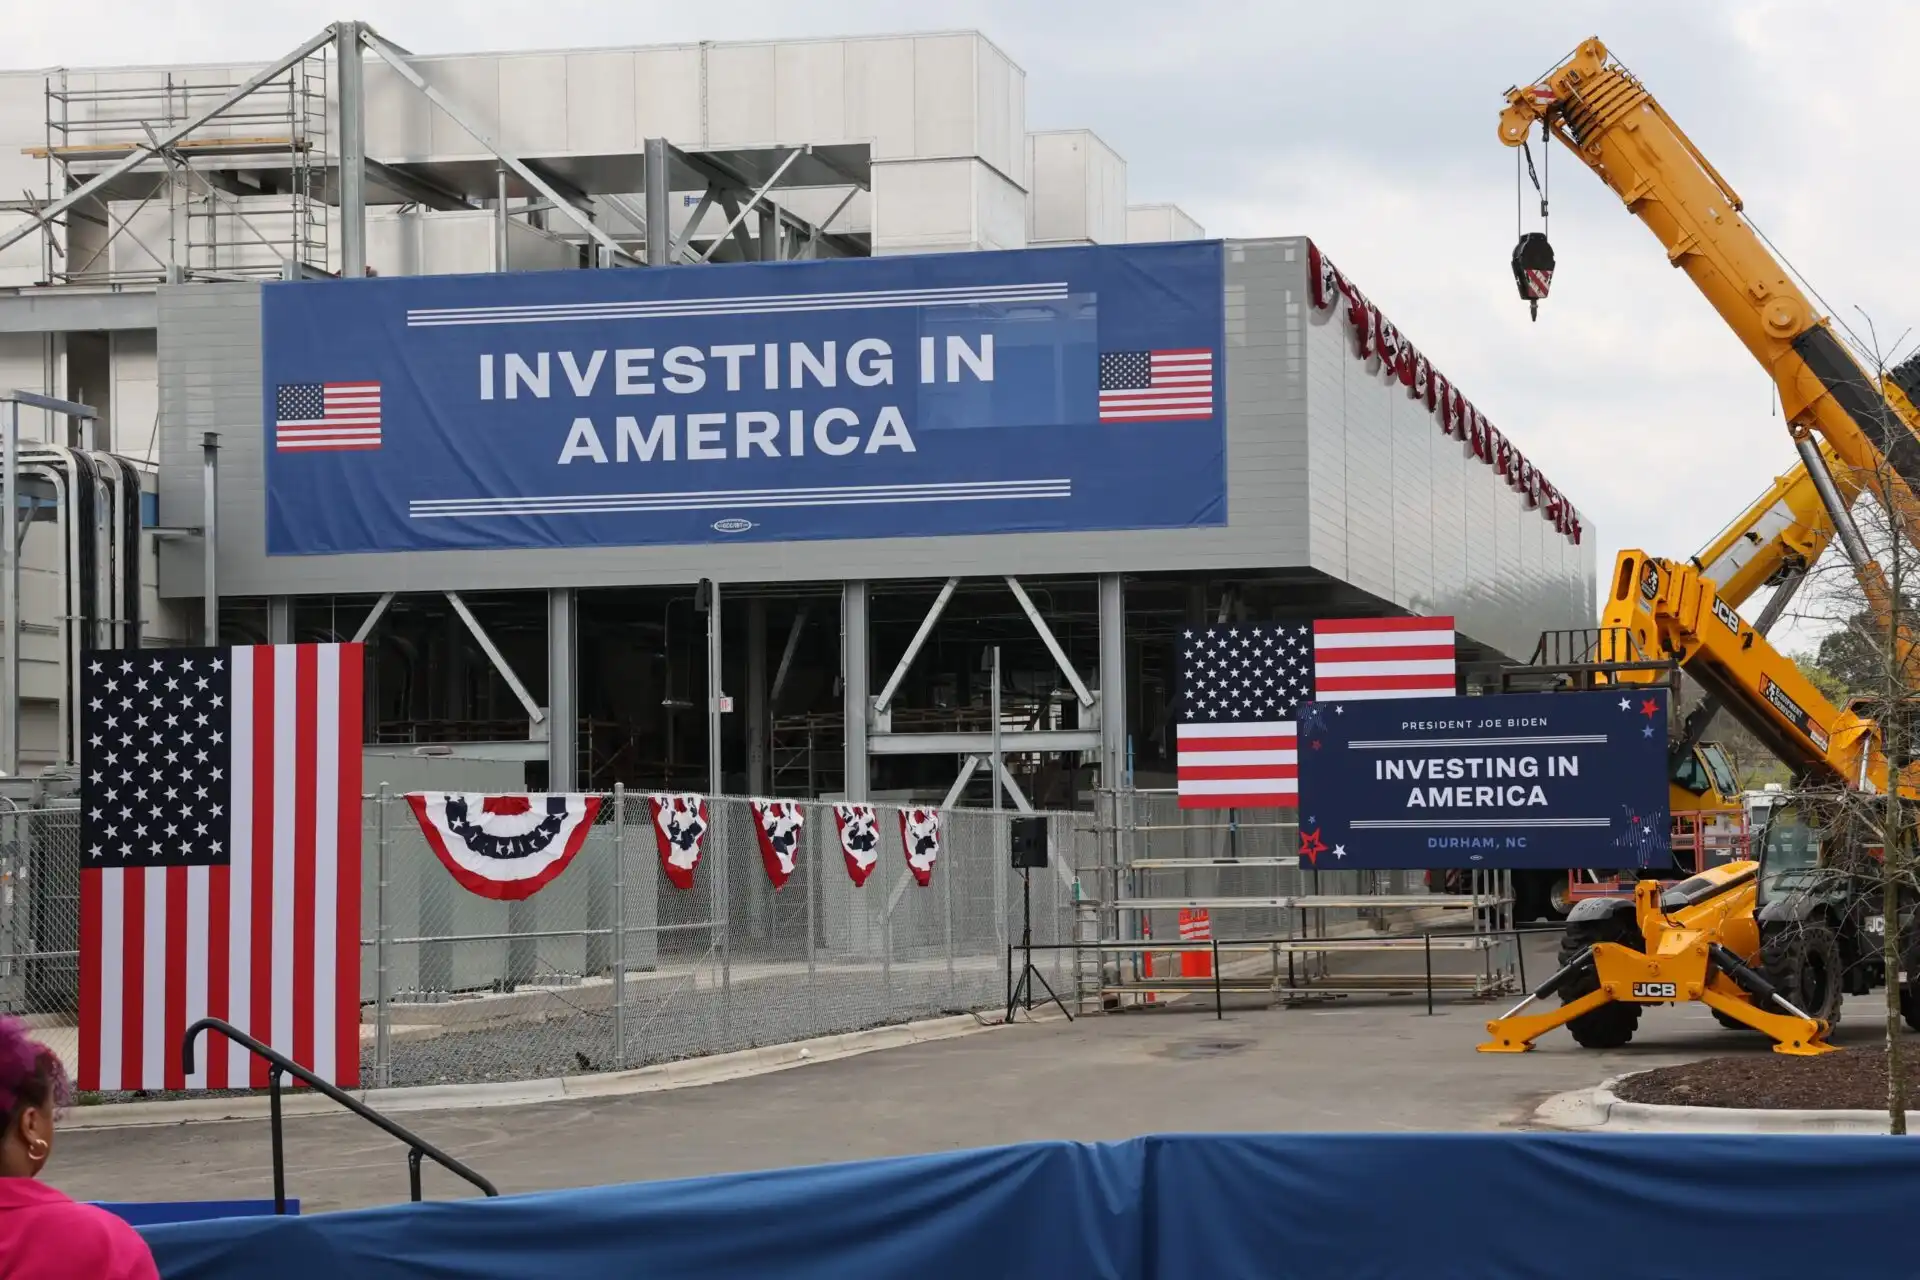 Biden kicks off his ‘Investing in America’ Tour in NC